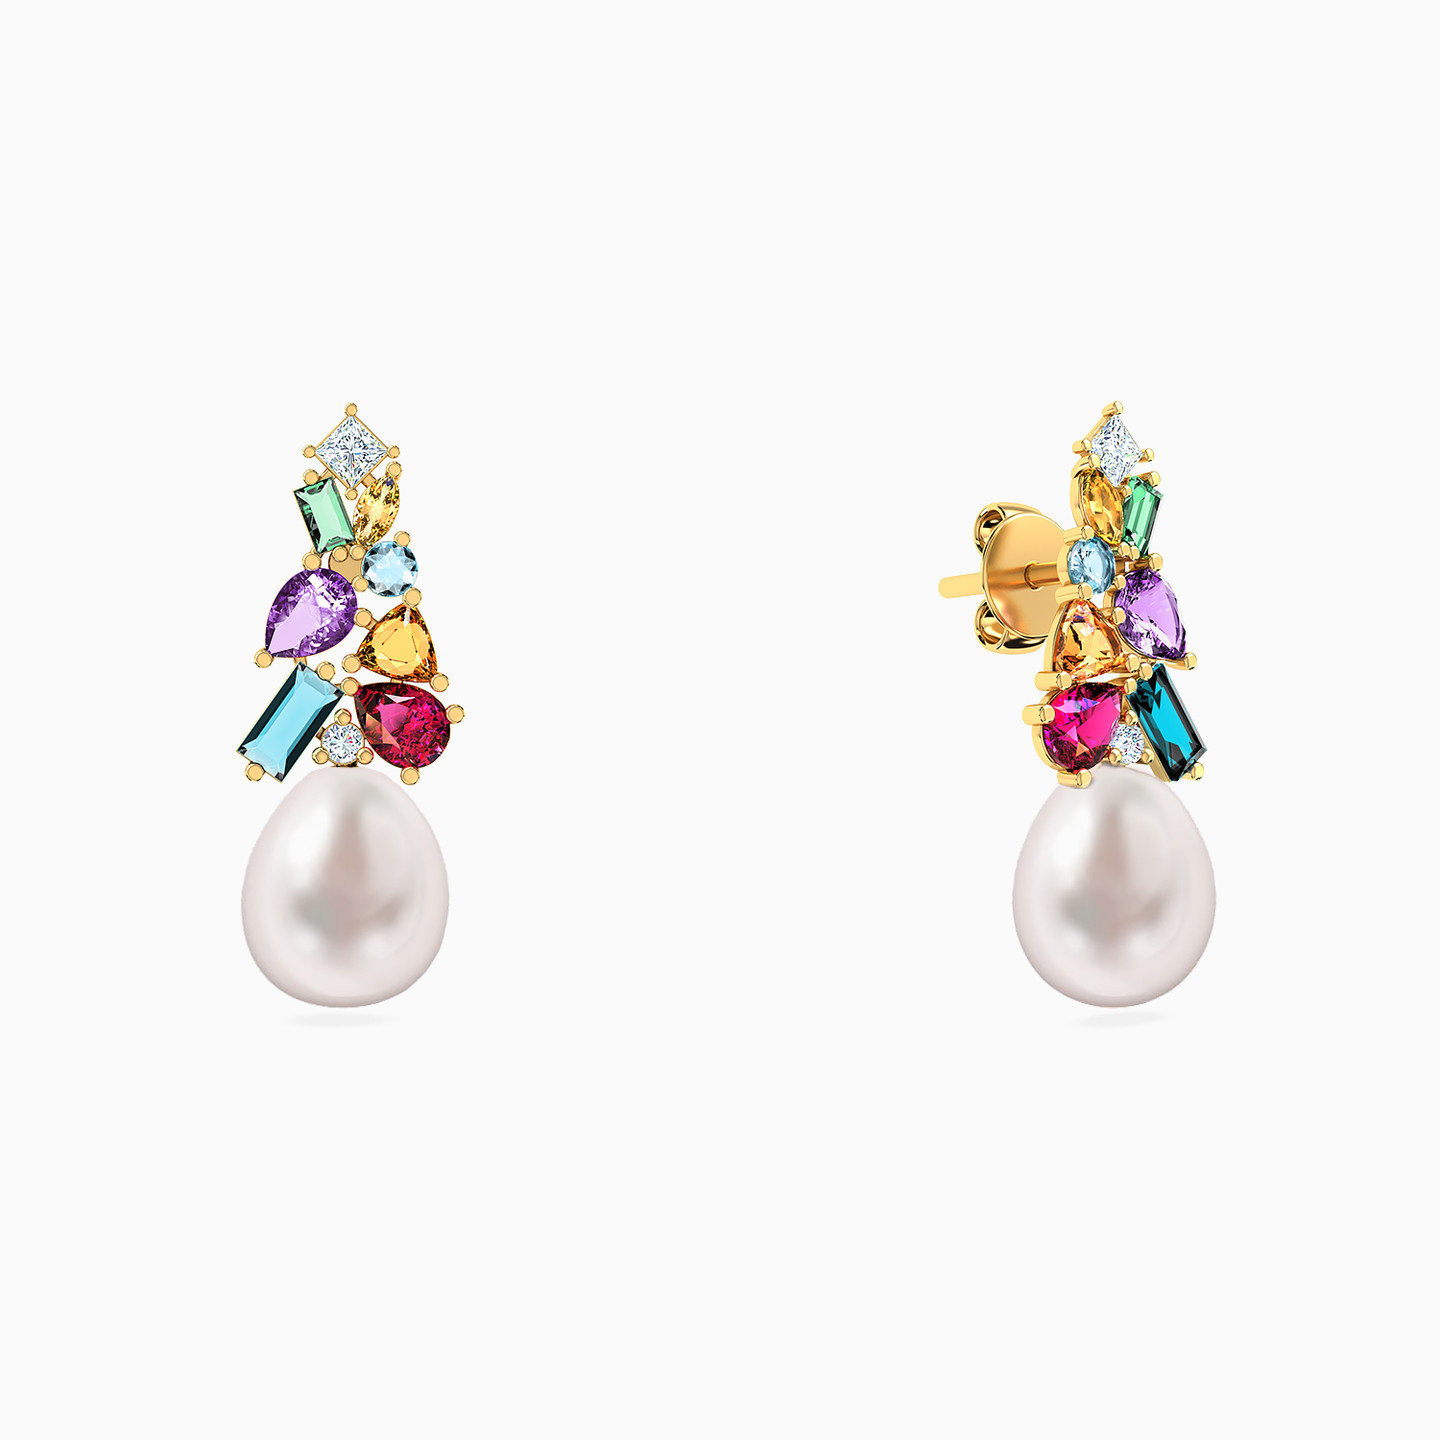 18K Gold Pearls & Colored Stones Stud Earrings - 2